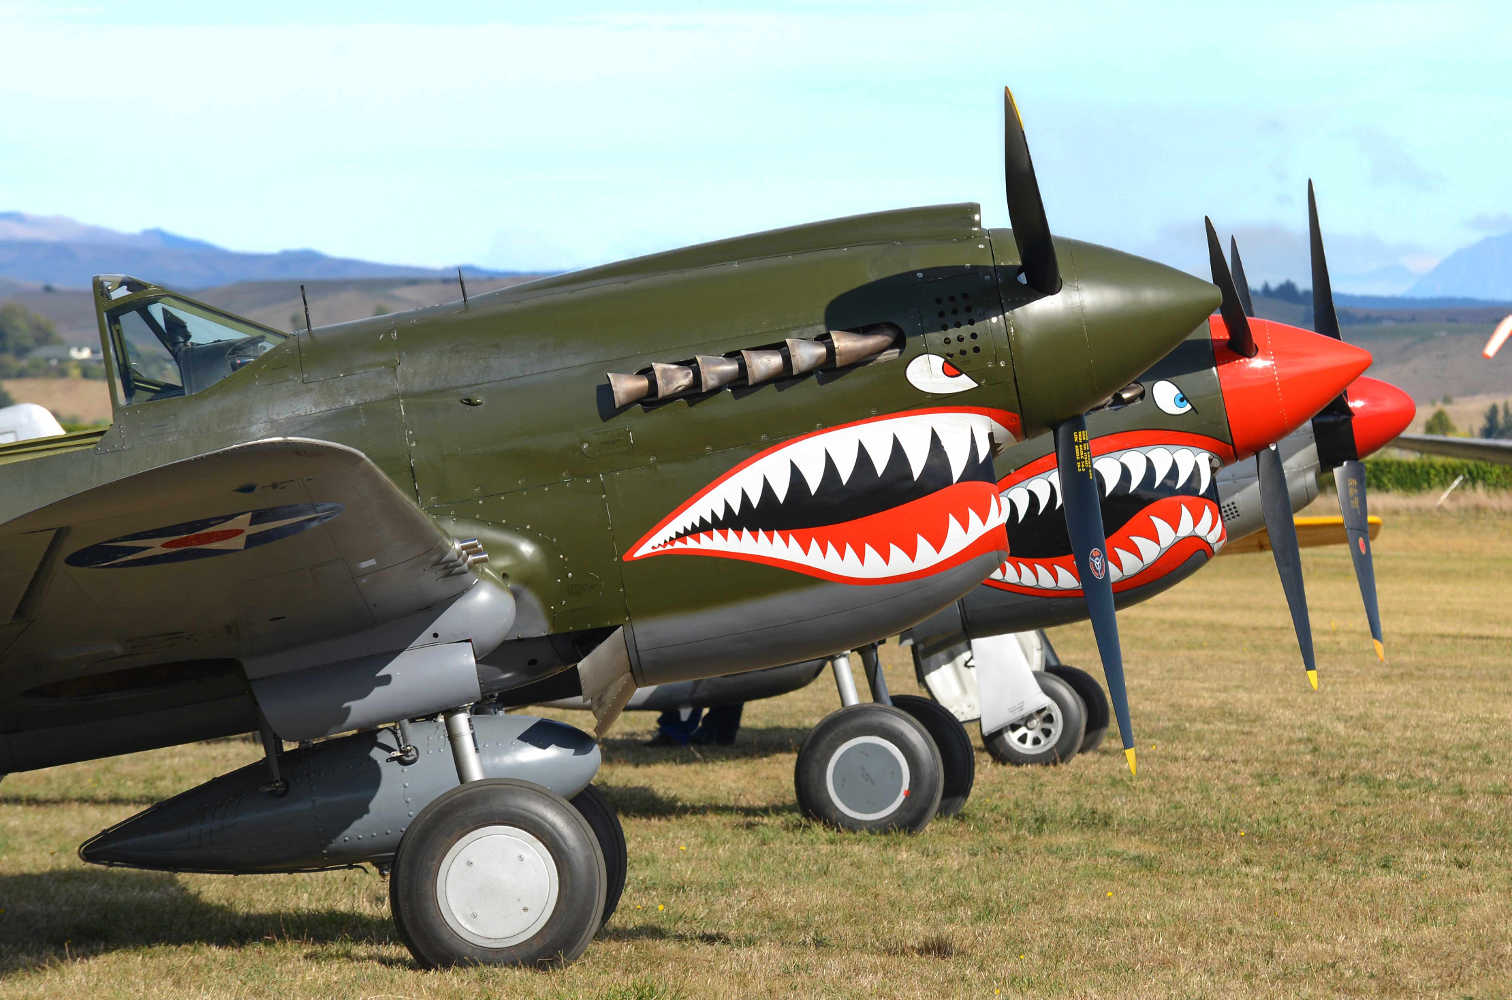 Omaka Vintage planes, Curtiss P-40 Kittyhawk aircraft Royal New Zealand air force, Marlborough, New Zealand